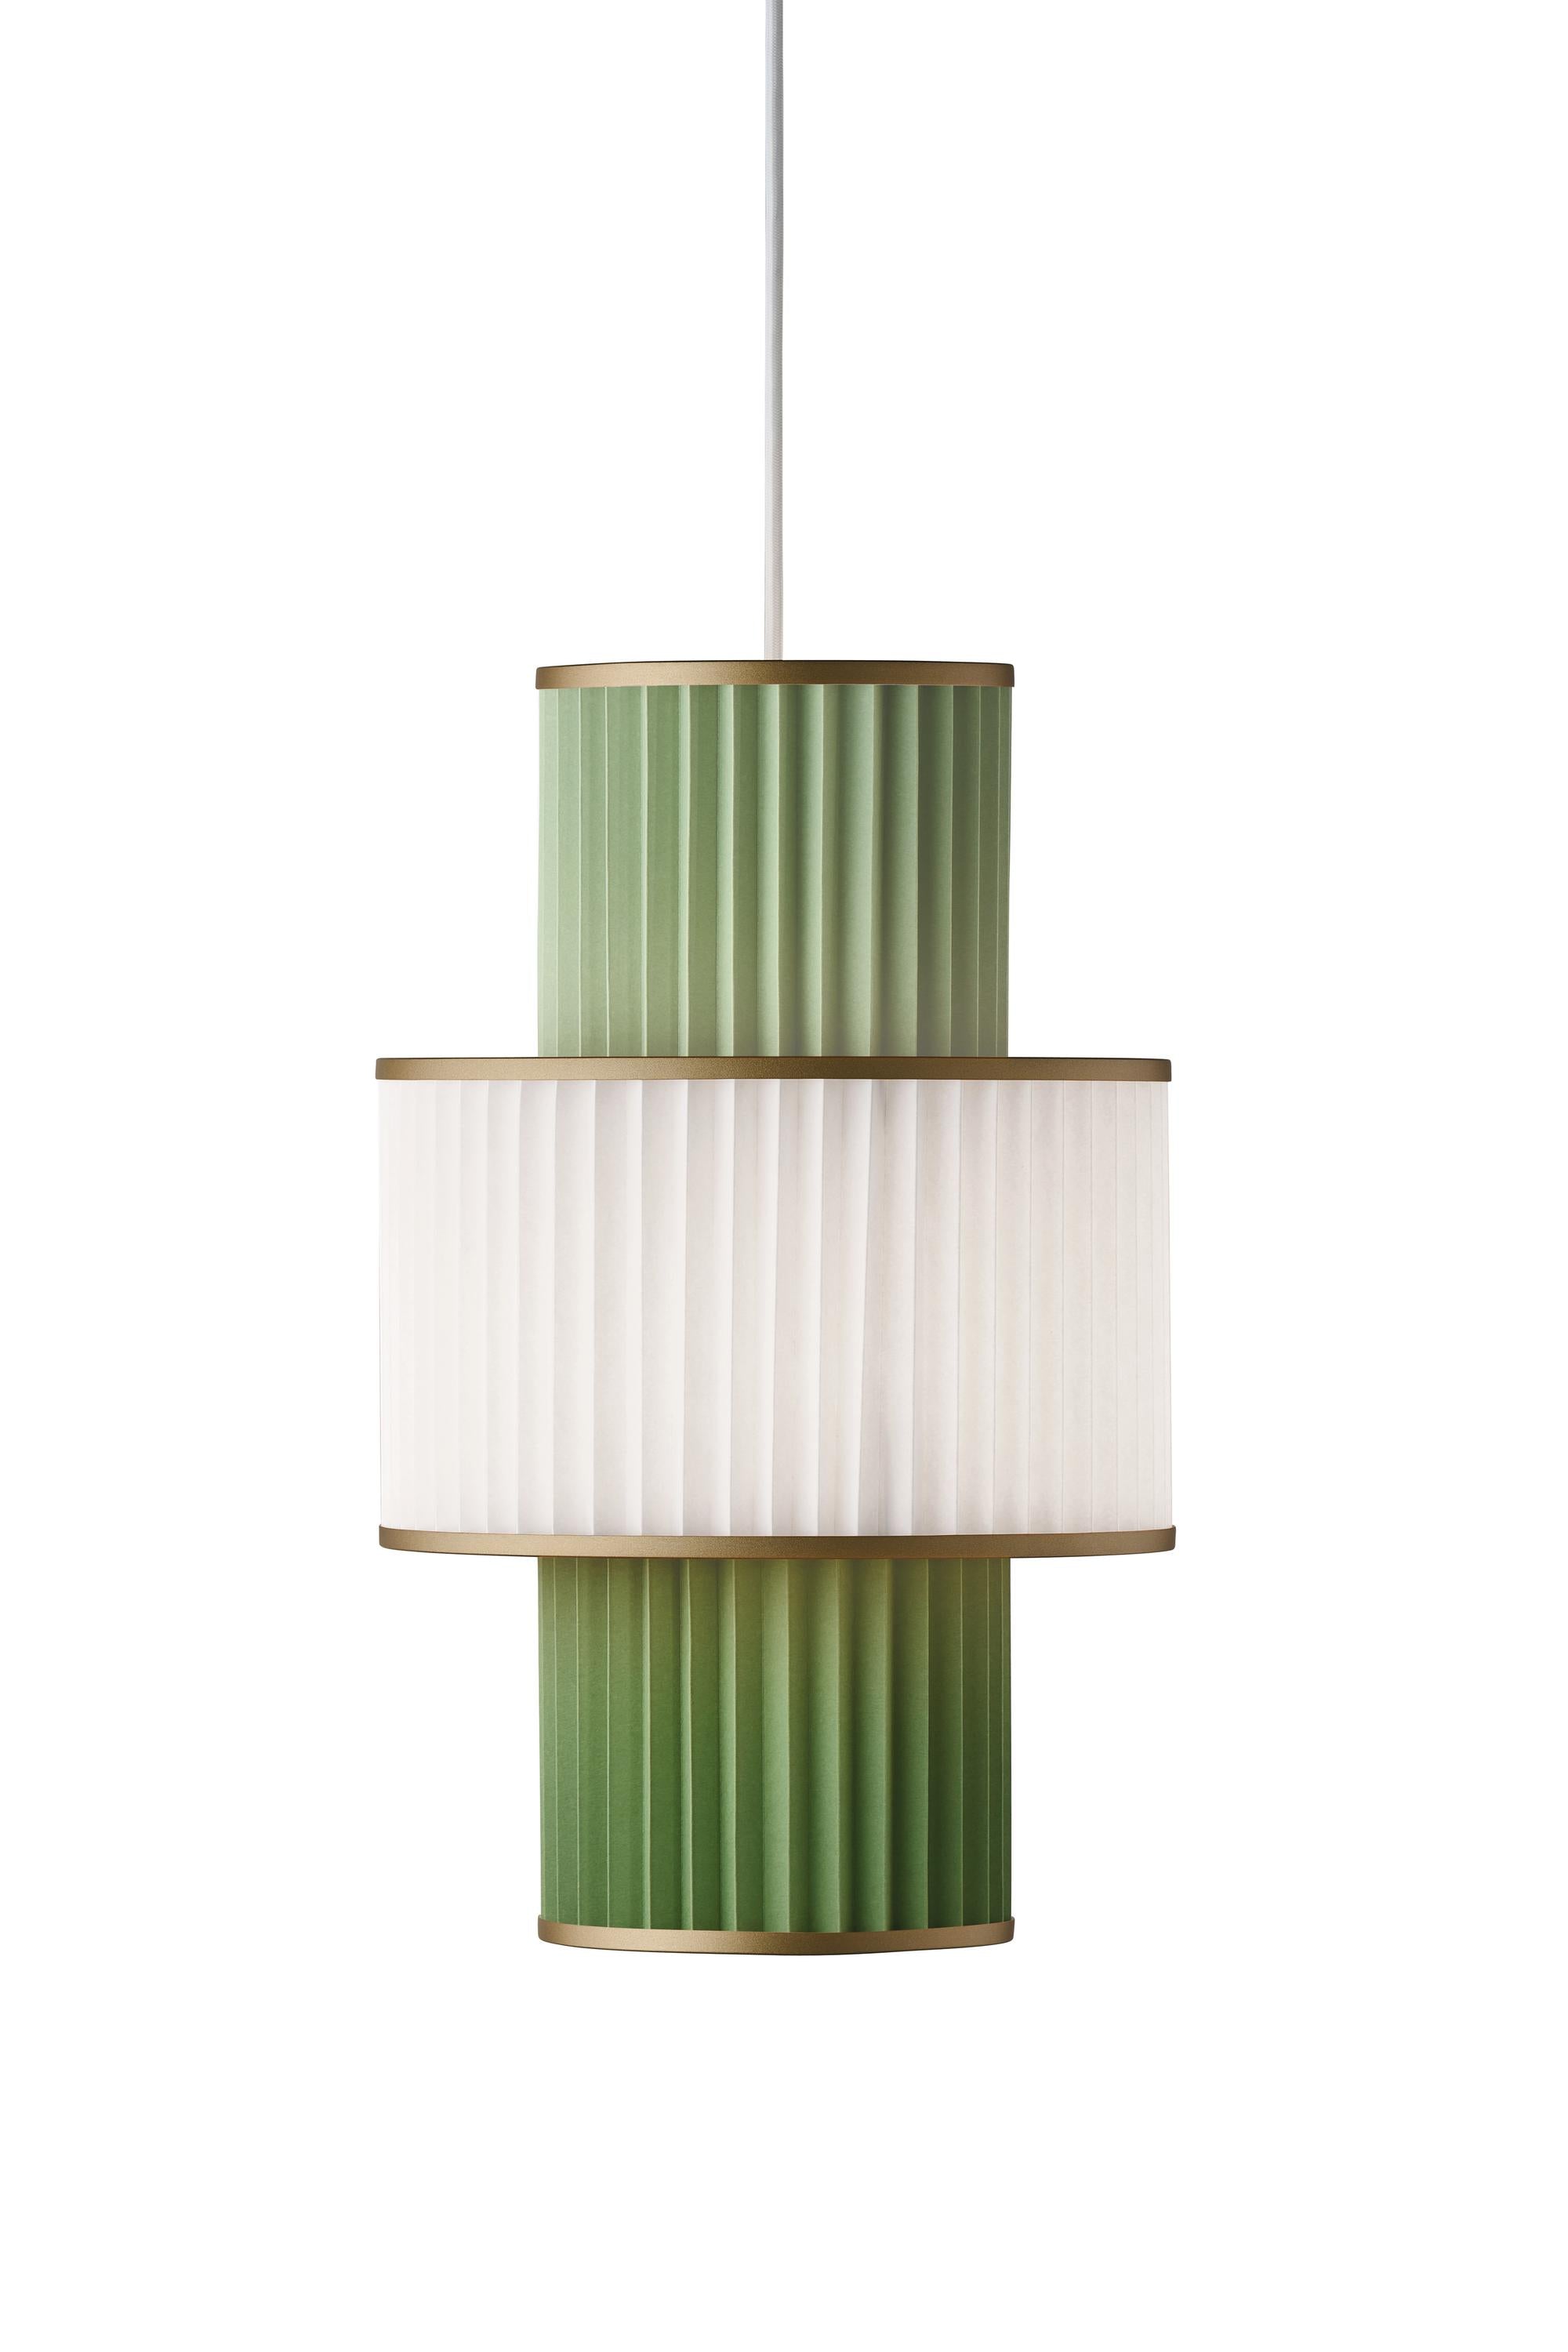 Le Klint Plivello Suspension Lamp Golden/White/Light Green med 3 nuancer (S M S)